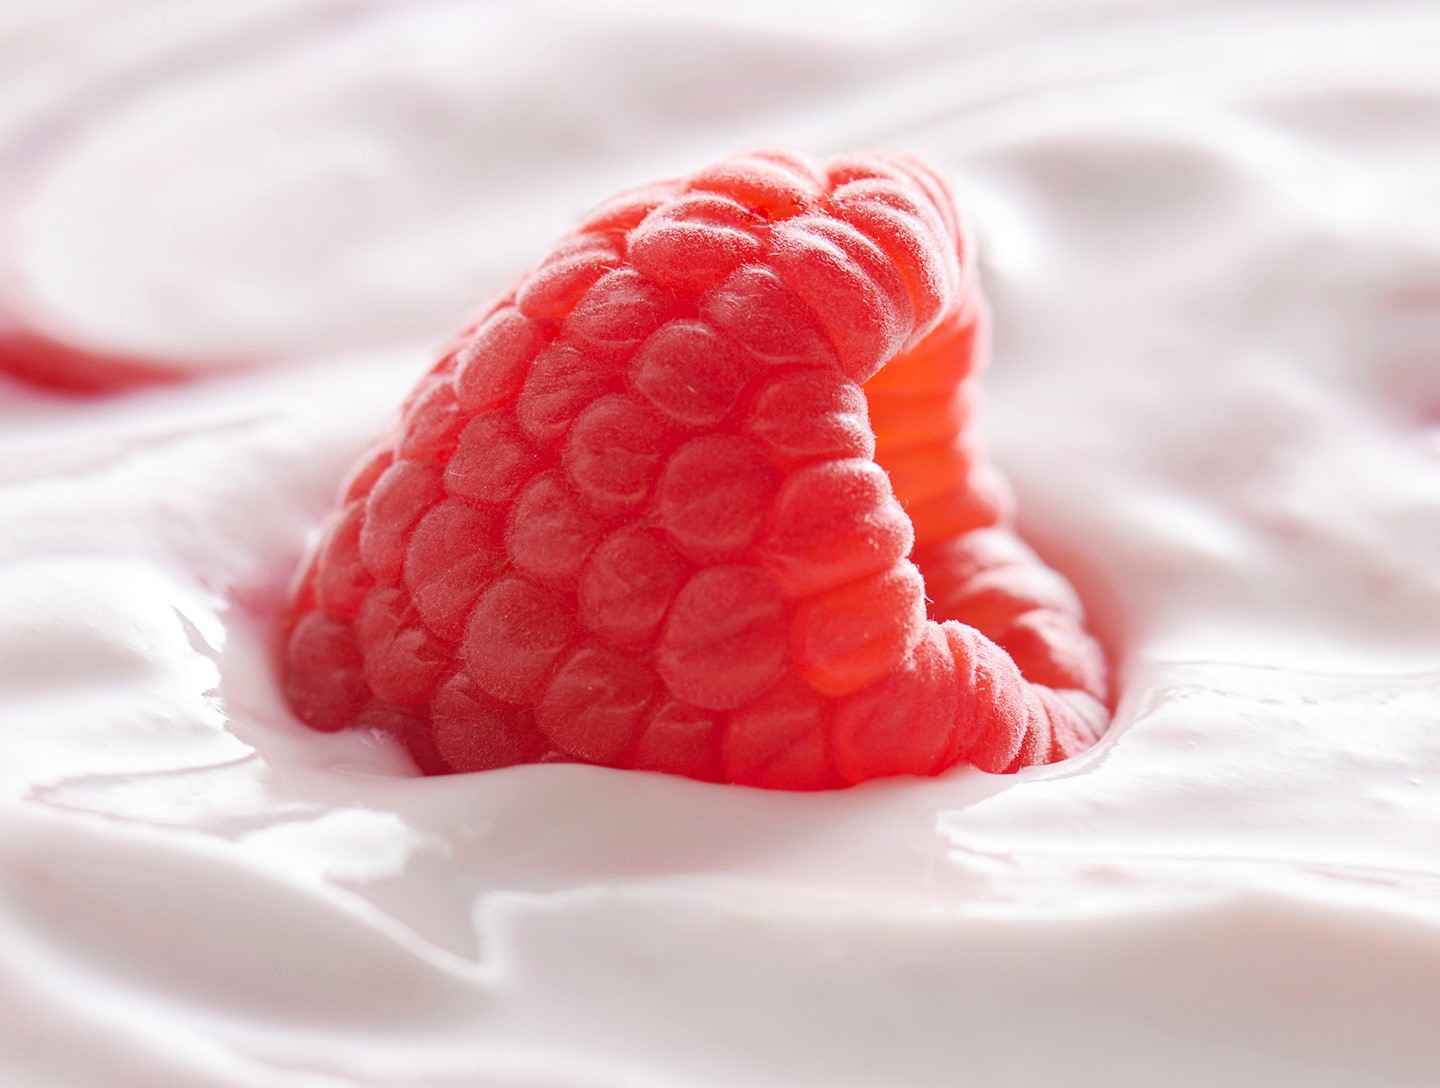 Raspberryyogurt